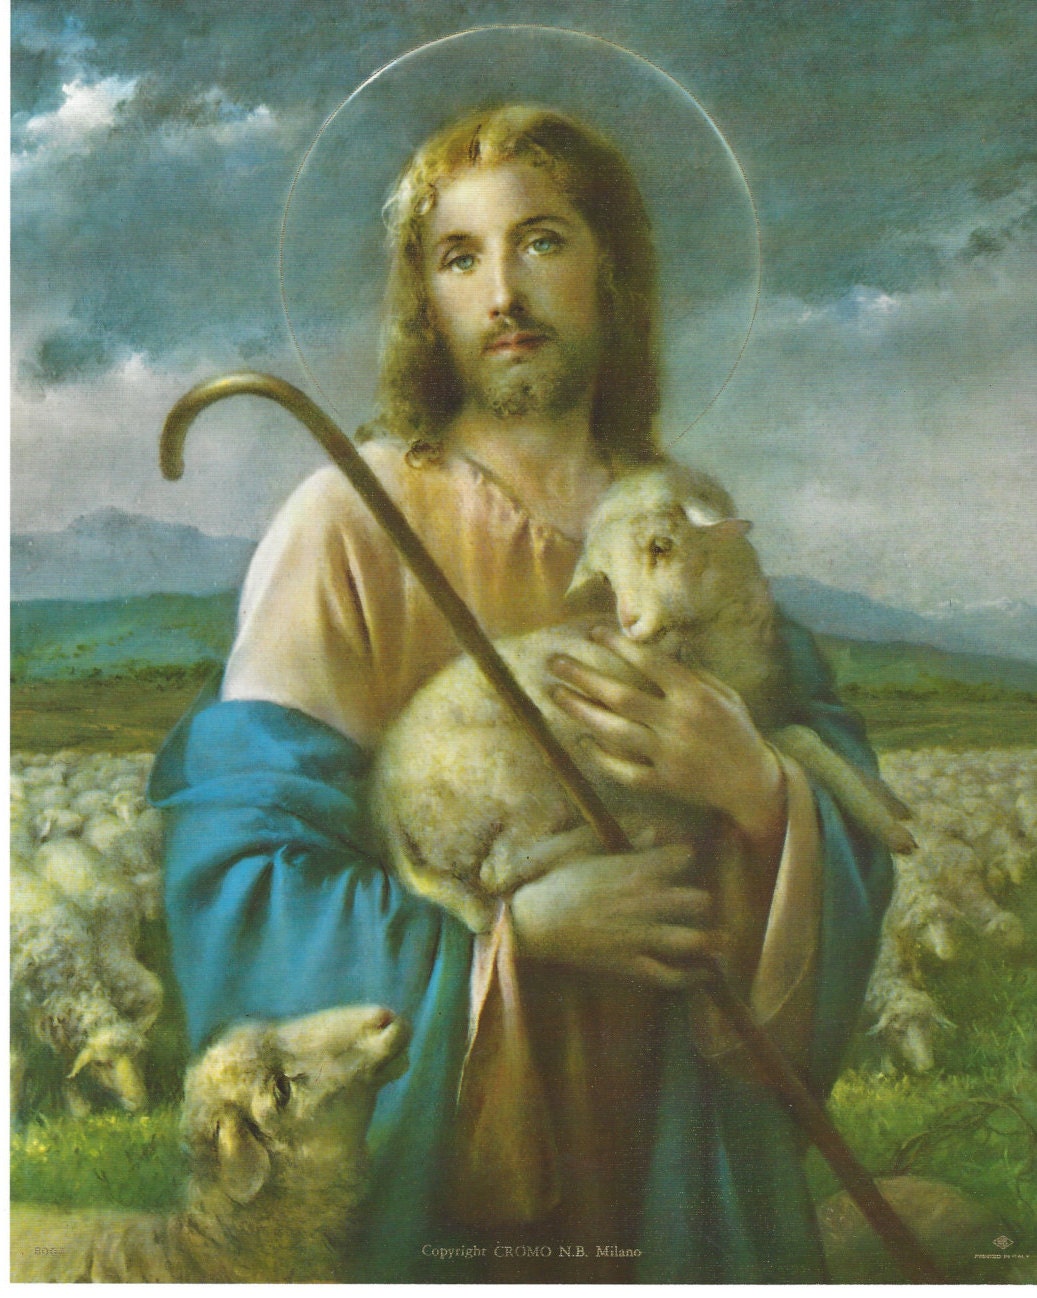 Христос пастырь. Эстебан Мурильо добрый Пастырь. Бартоломео Эстебан Мурильо добрый Пастырь. Иисус Христос Агнец икона. Икона Иисус Христос Агнец Божий.